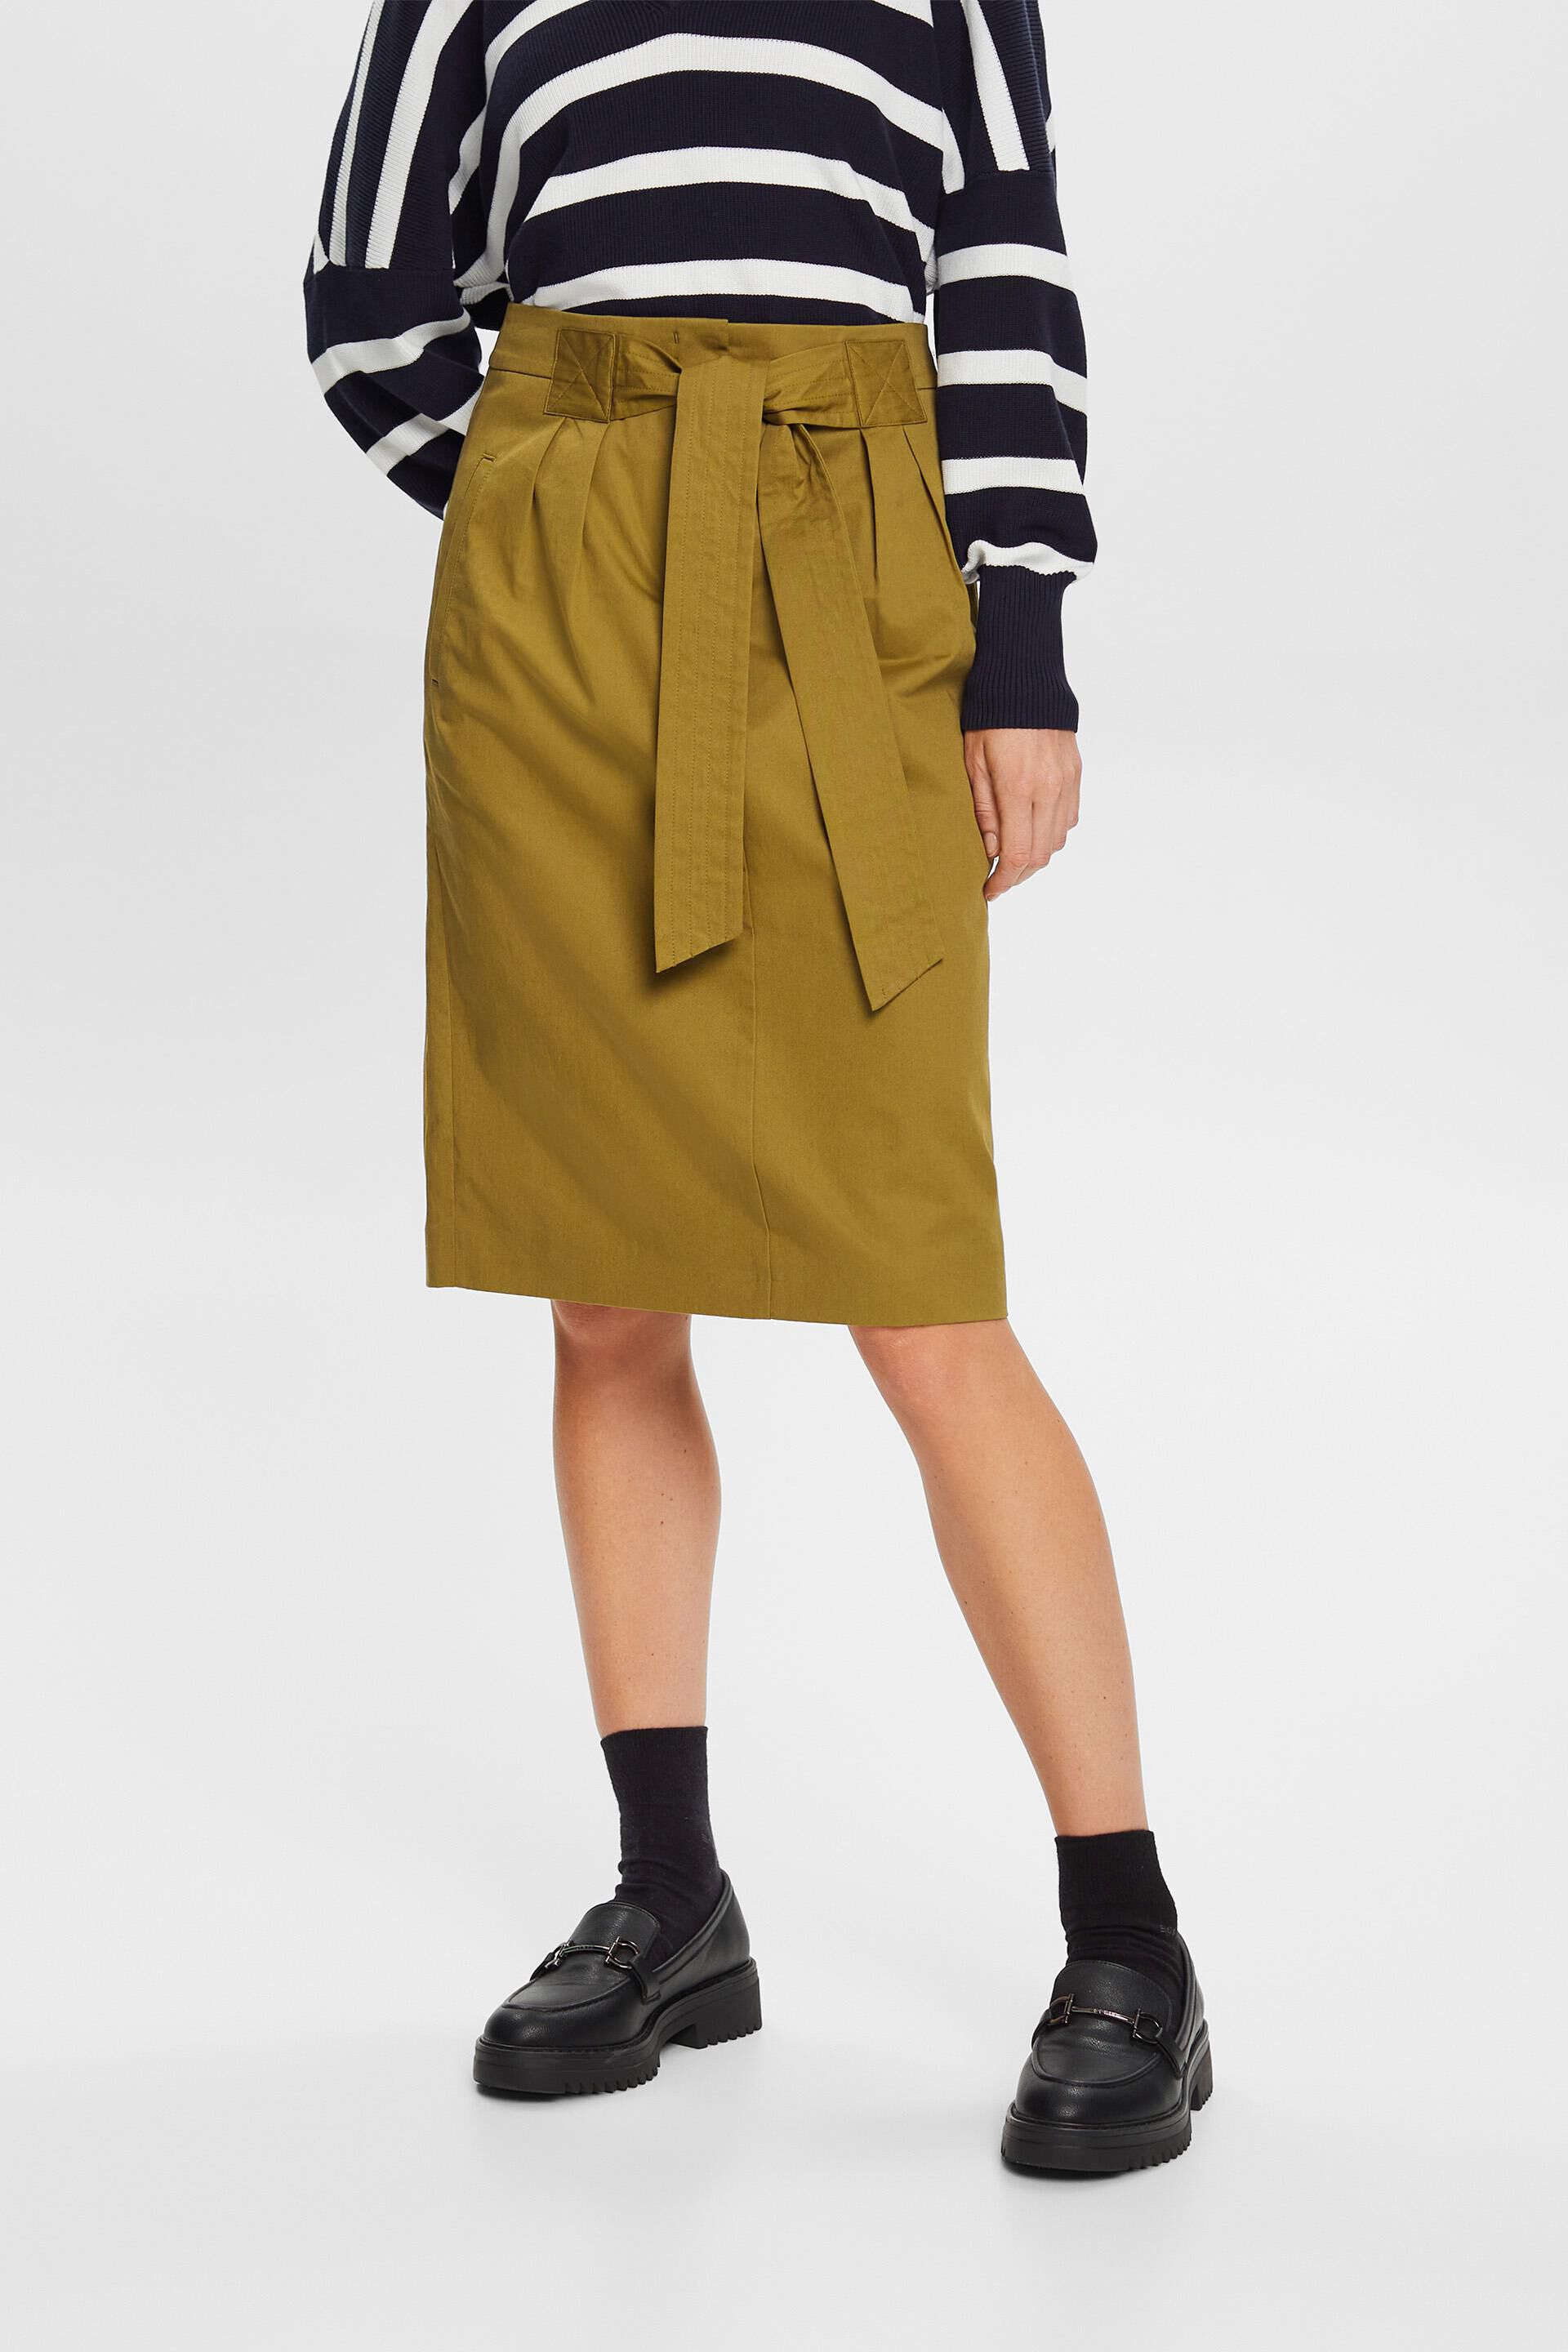 Esprit Belted 100% skirt, cotton knee length